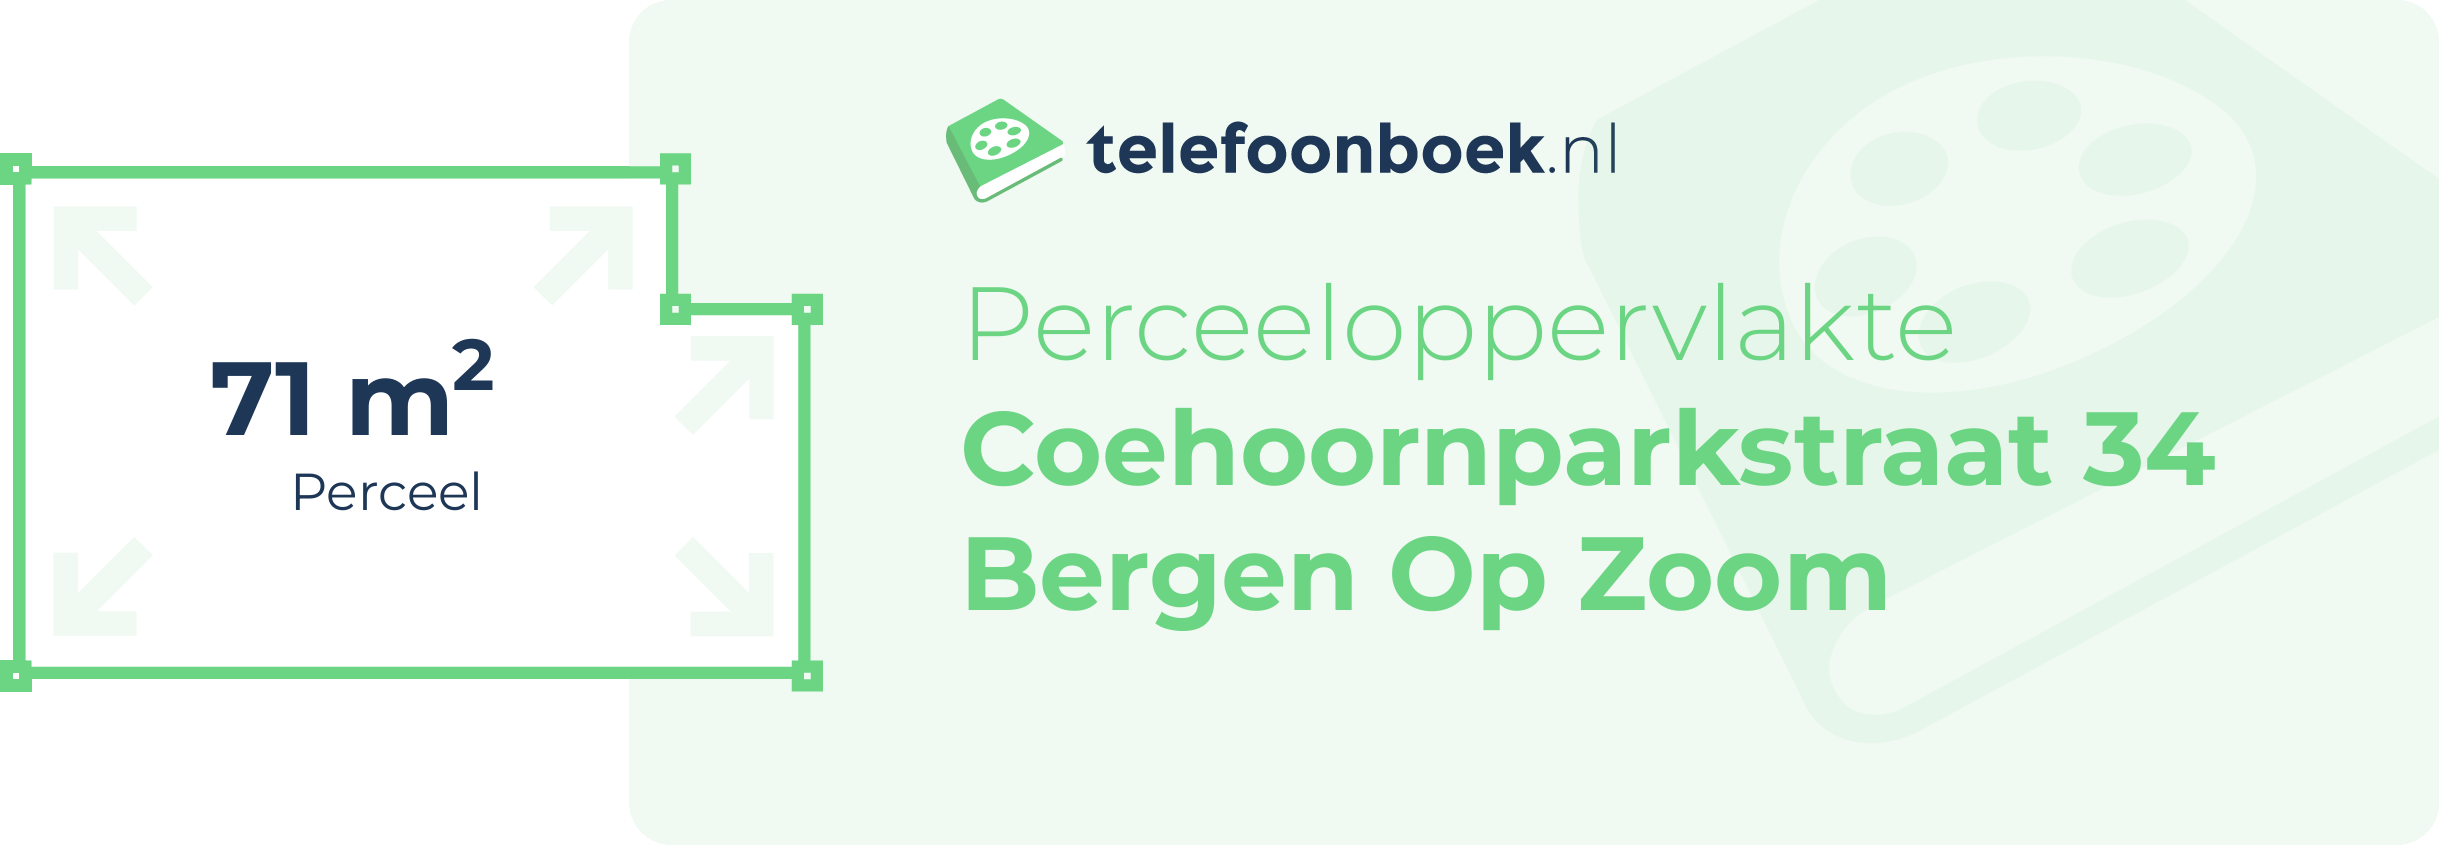 Perceeloppervlakte Coehoornparkstraat 34 Bergen Op Zoom